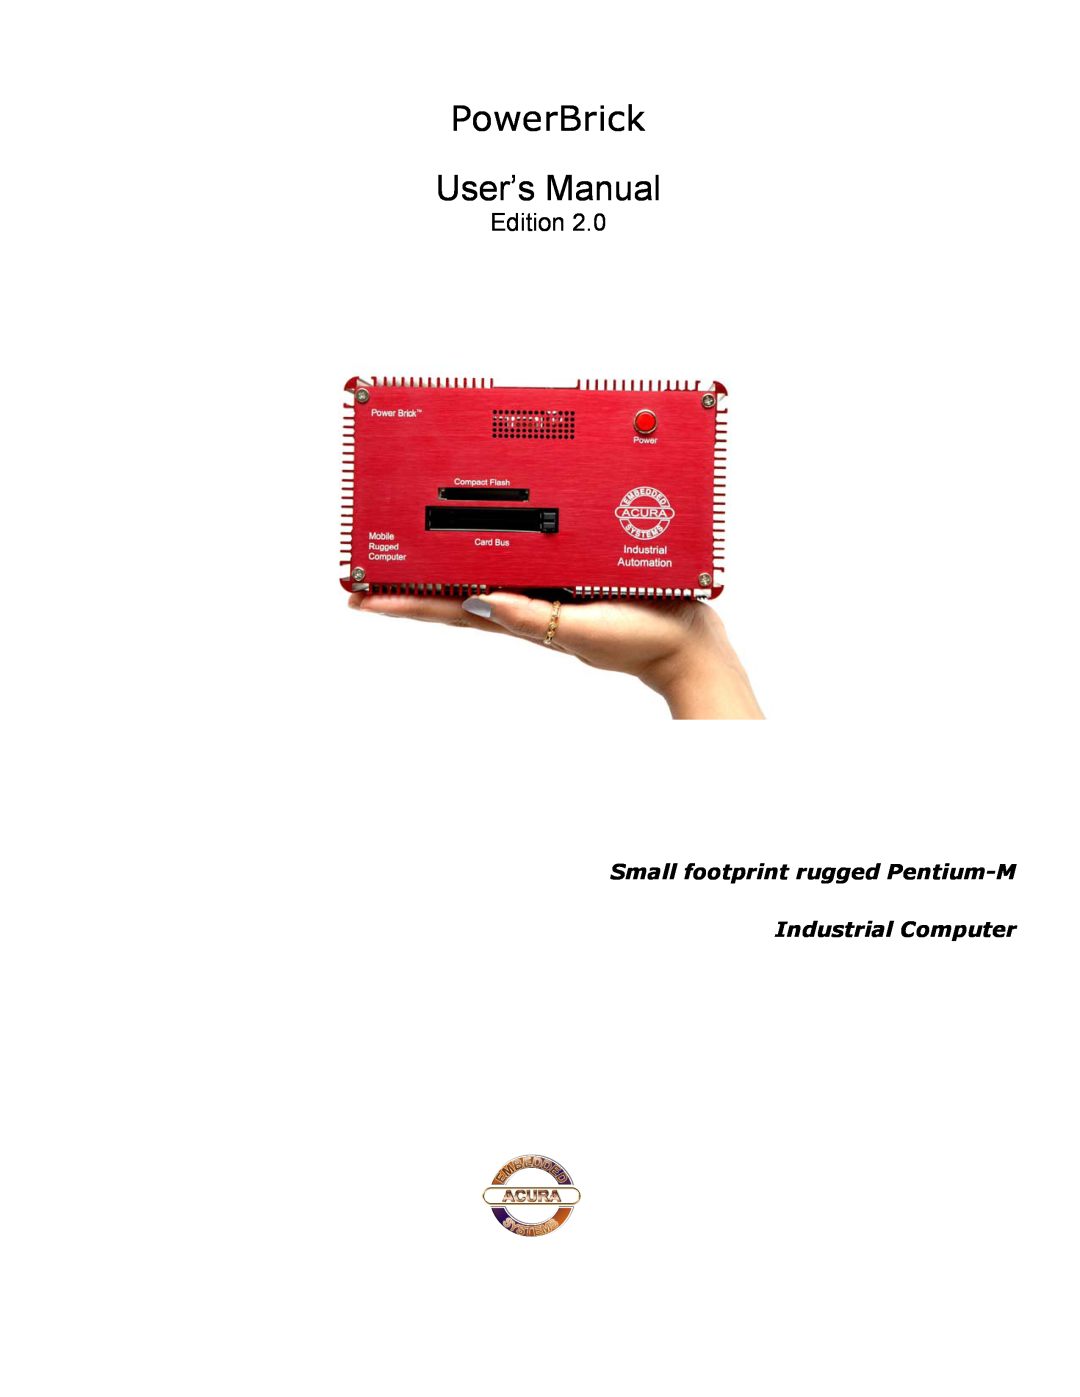 Acura Embedded Small footprint rugged Pentium-M user manual PowerBrick, User’s Manual 